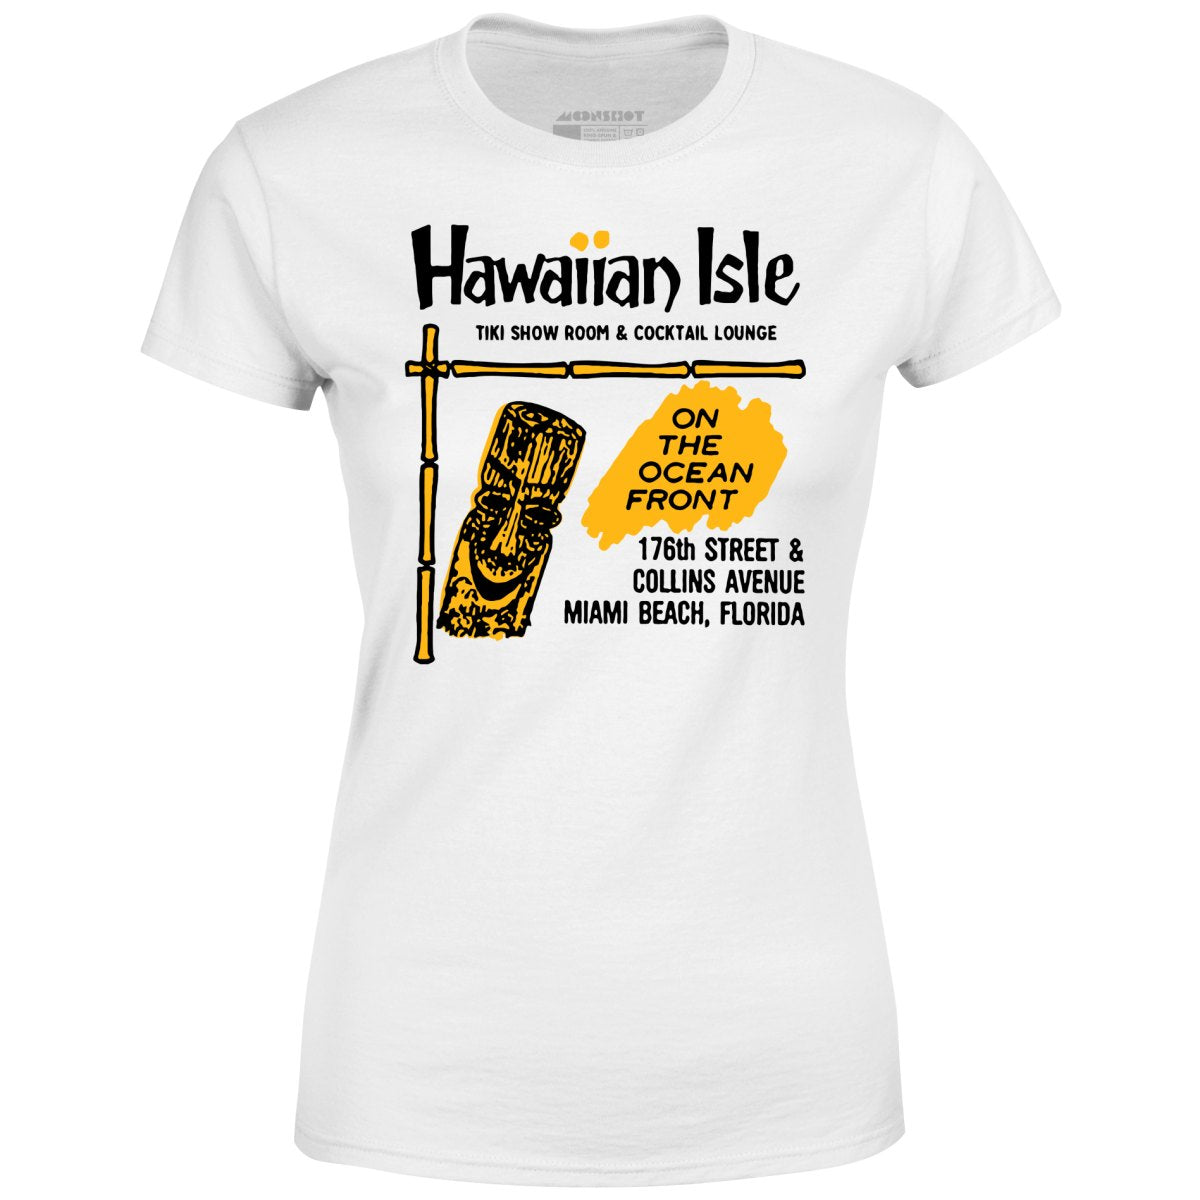 Hawaiian Isle - Miami Beach, FL - Vintage Tiki Bar - Women's T-Shirt